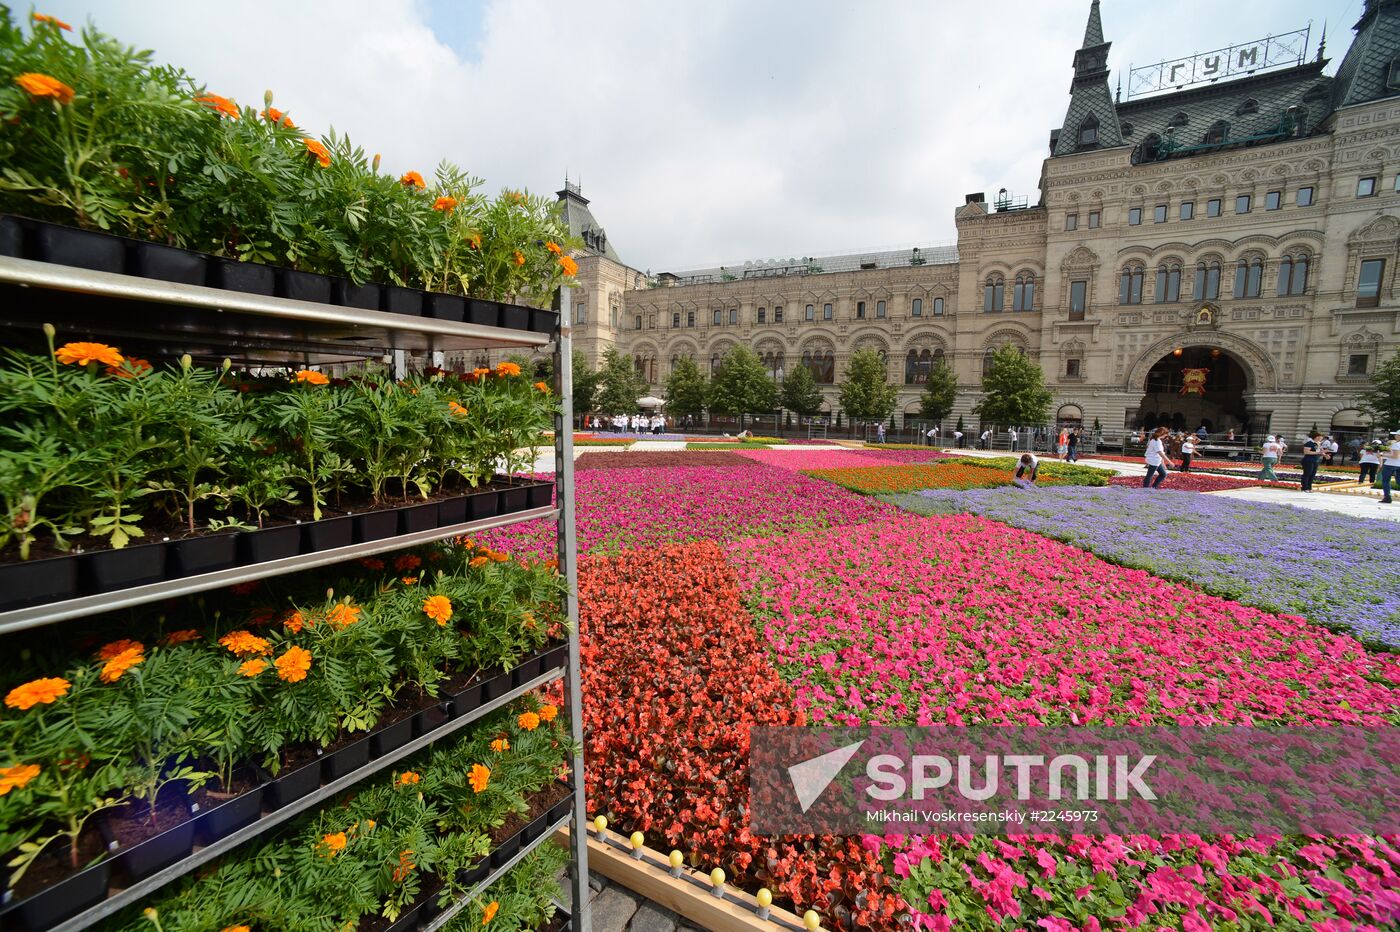 Flower carpet laid on Red Square